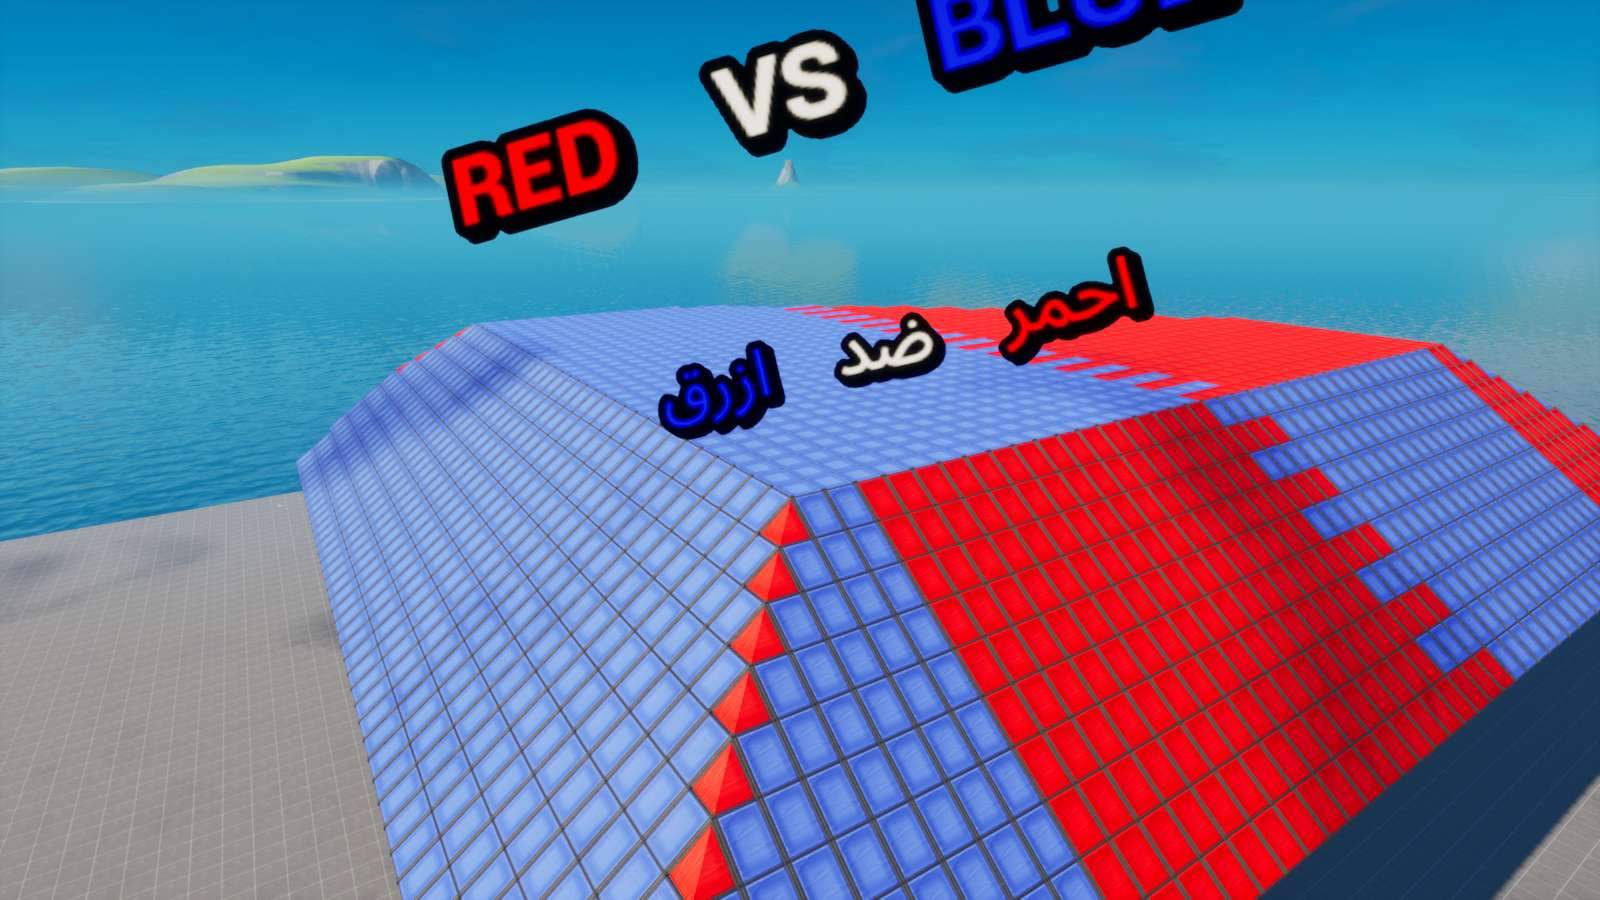 RED VS BLUE احمر ضد ازرق مطور